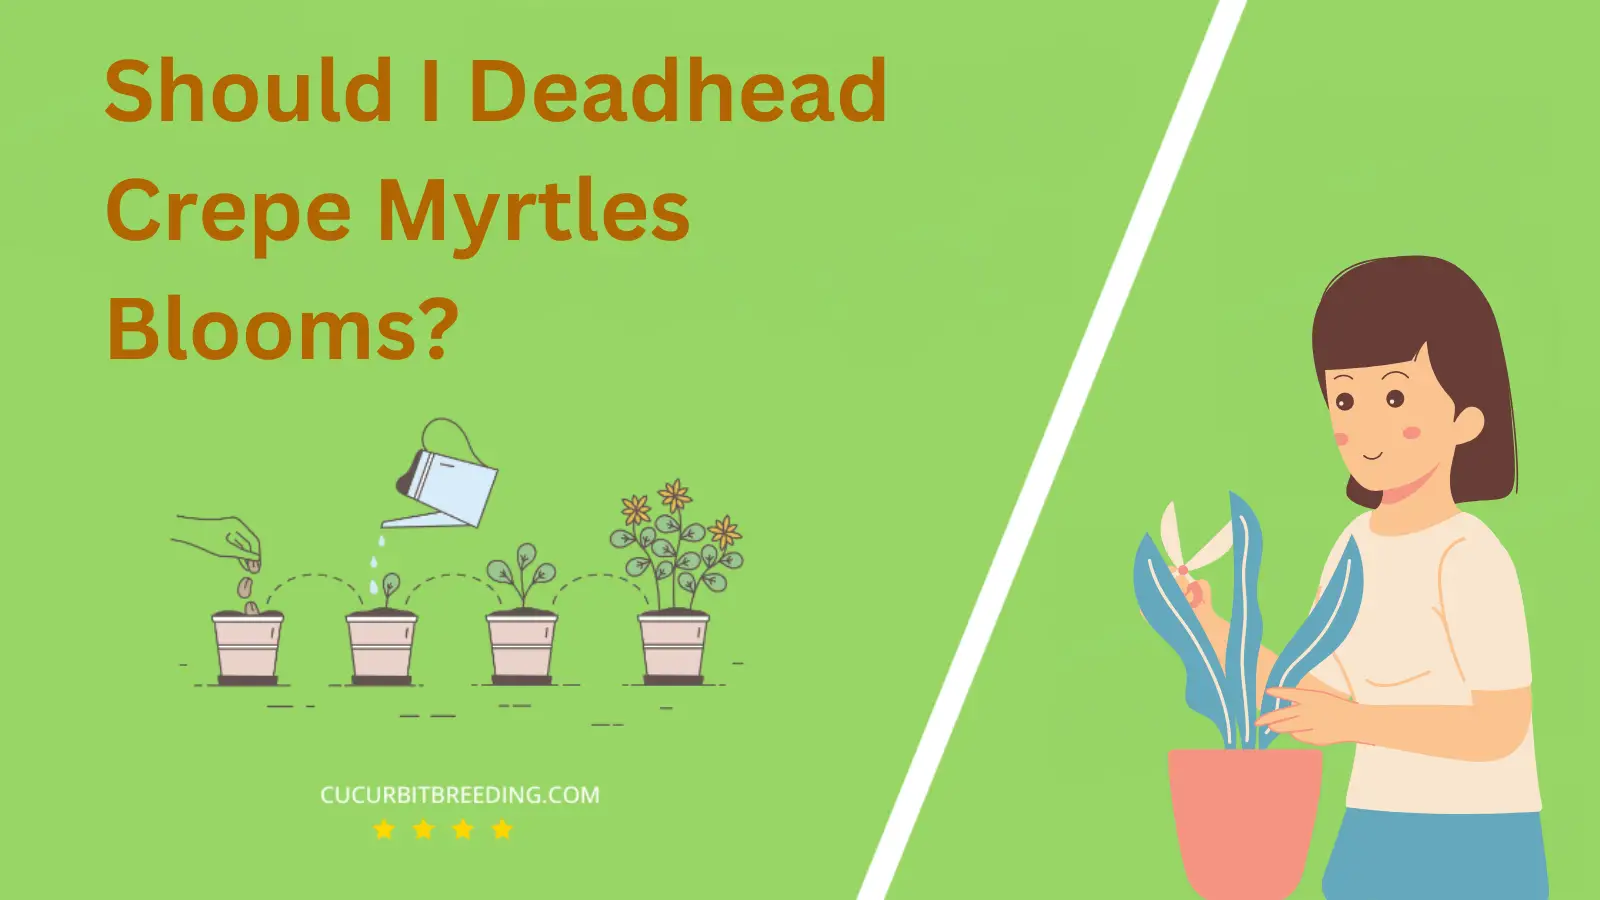 Should I Deadhead Crepe Myrtles Blooms?